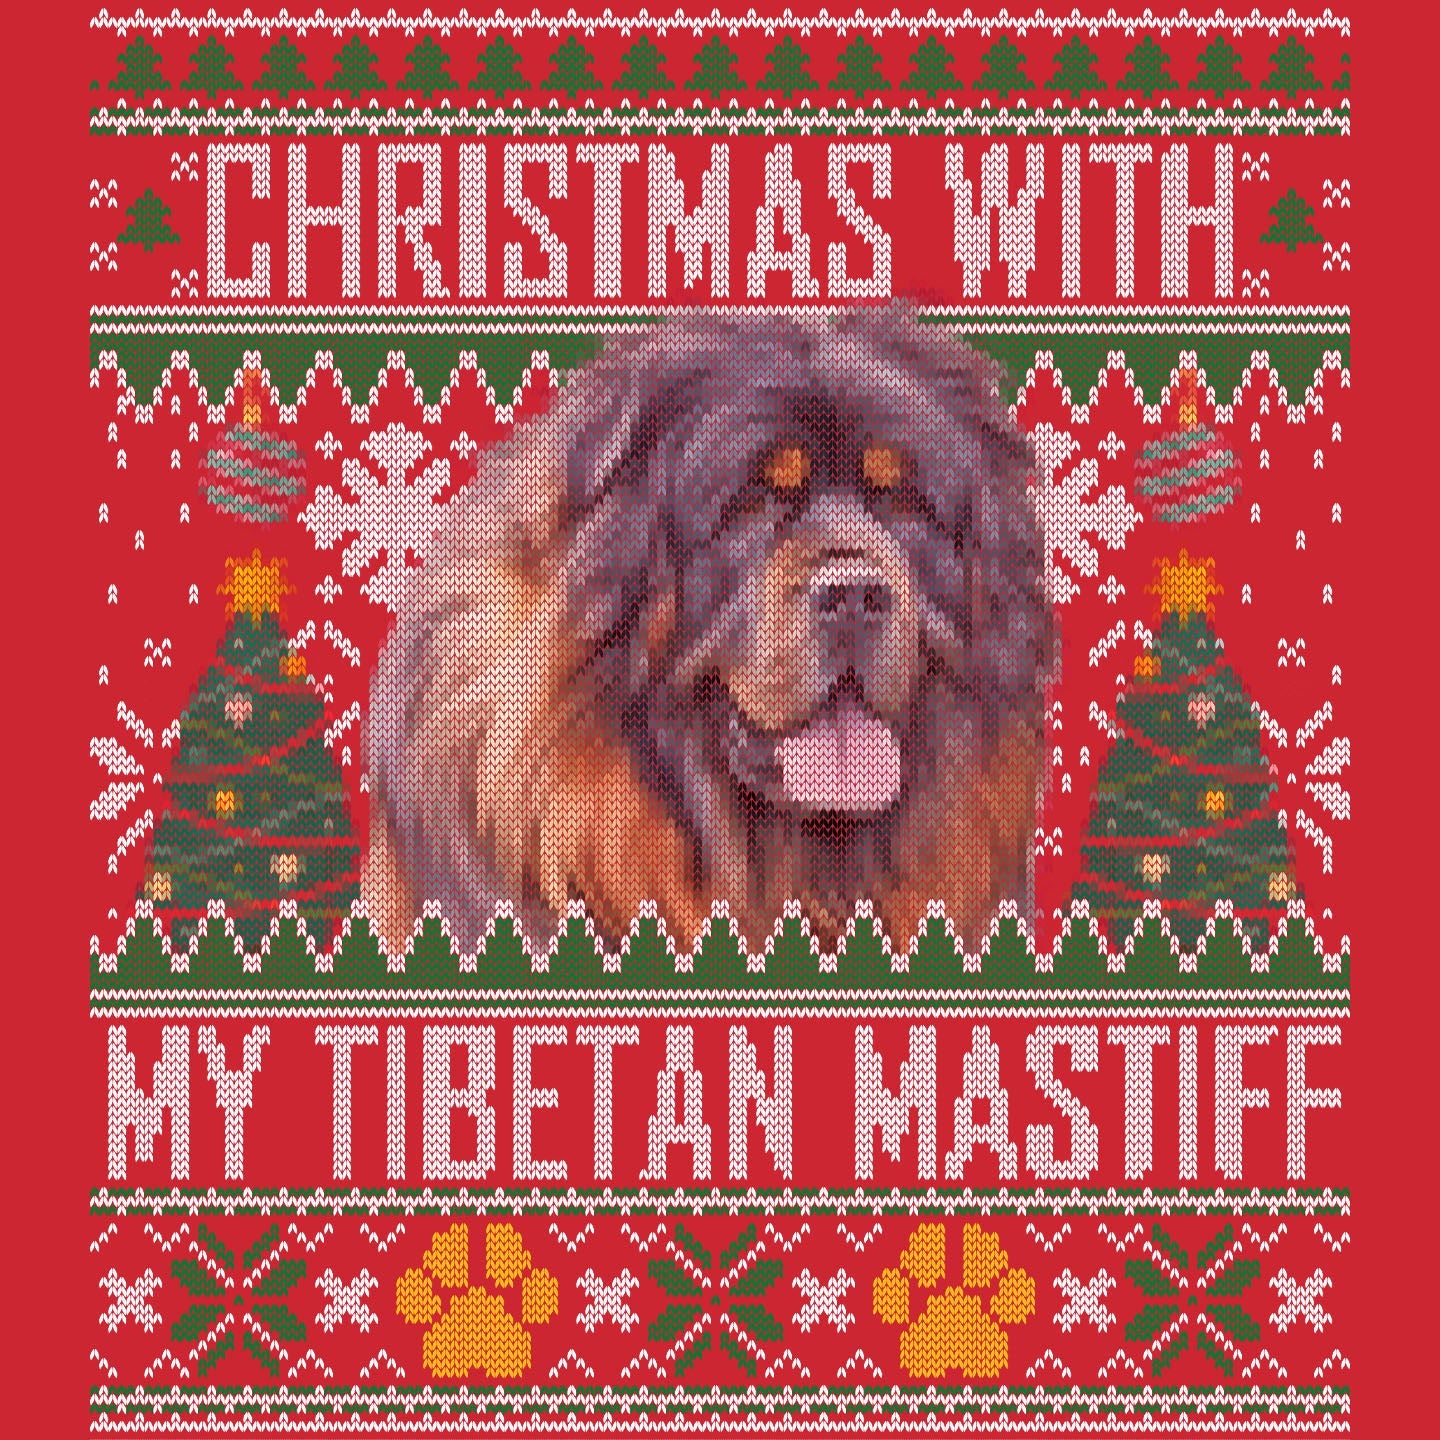 Ugly Sweater Christmas with My Tibetan Mastiff - Adult Unisex Long Sleeve T-Shirt